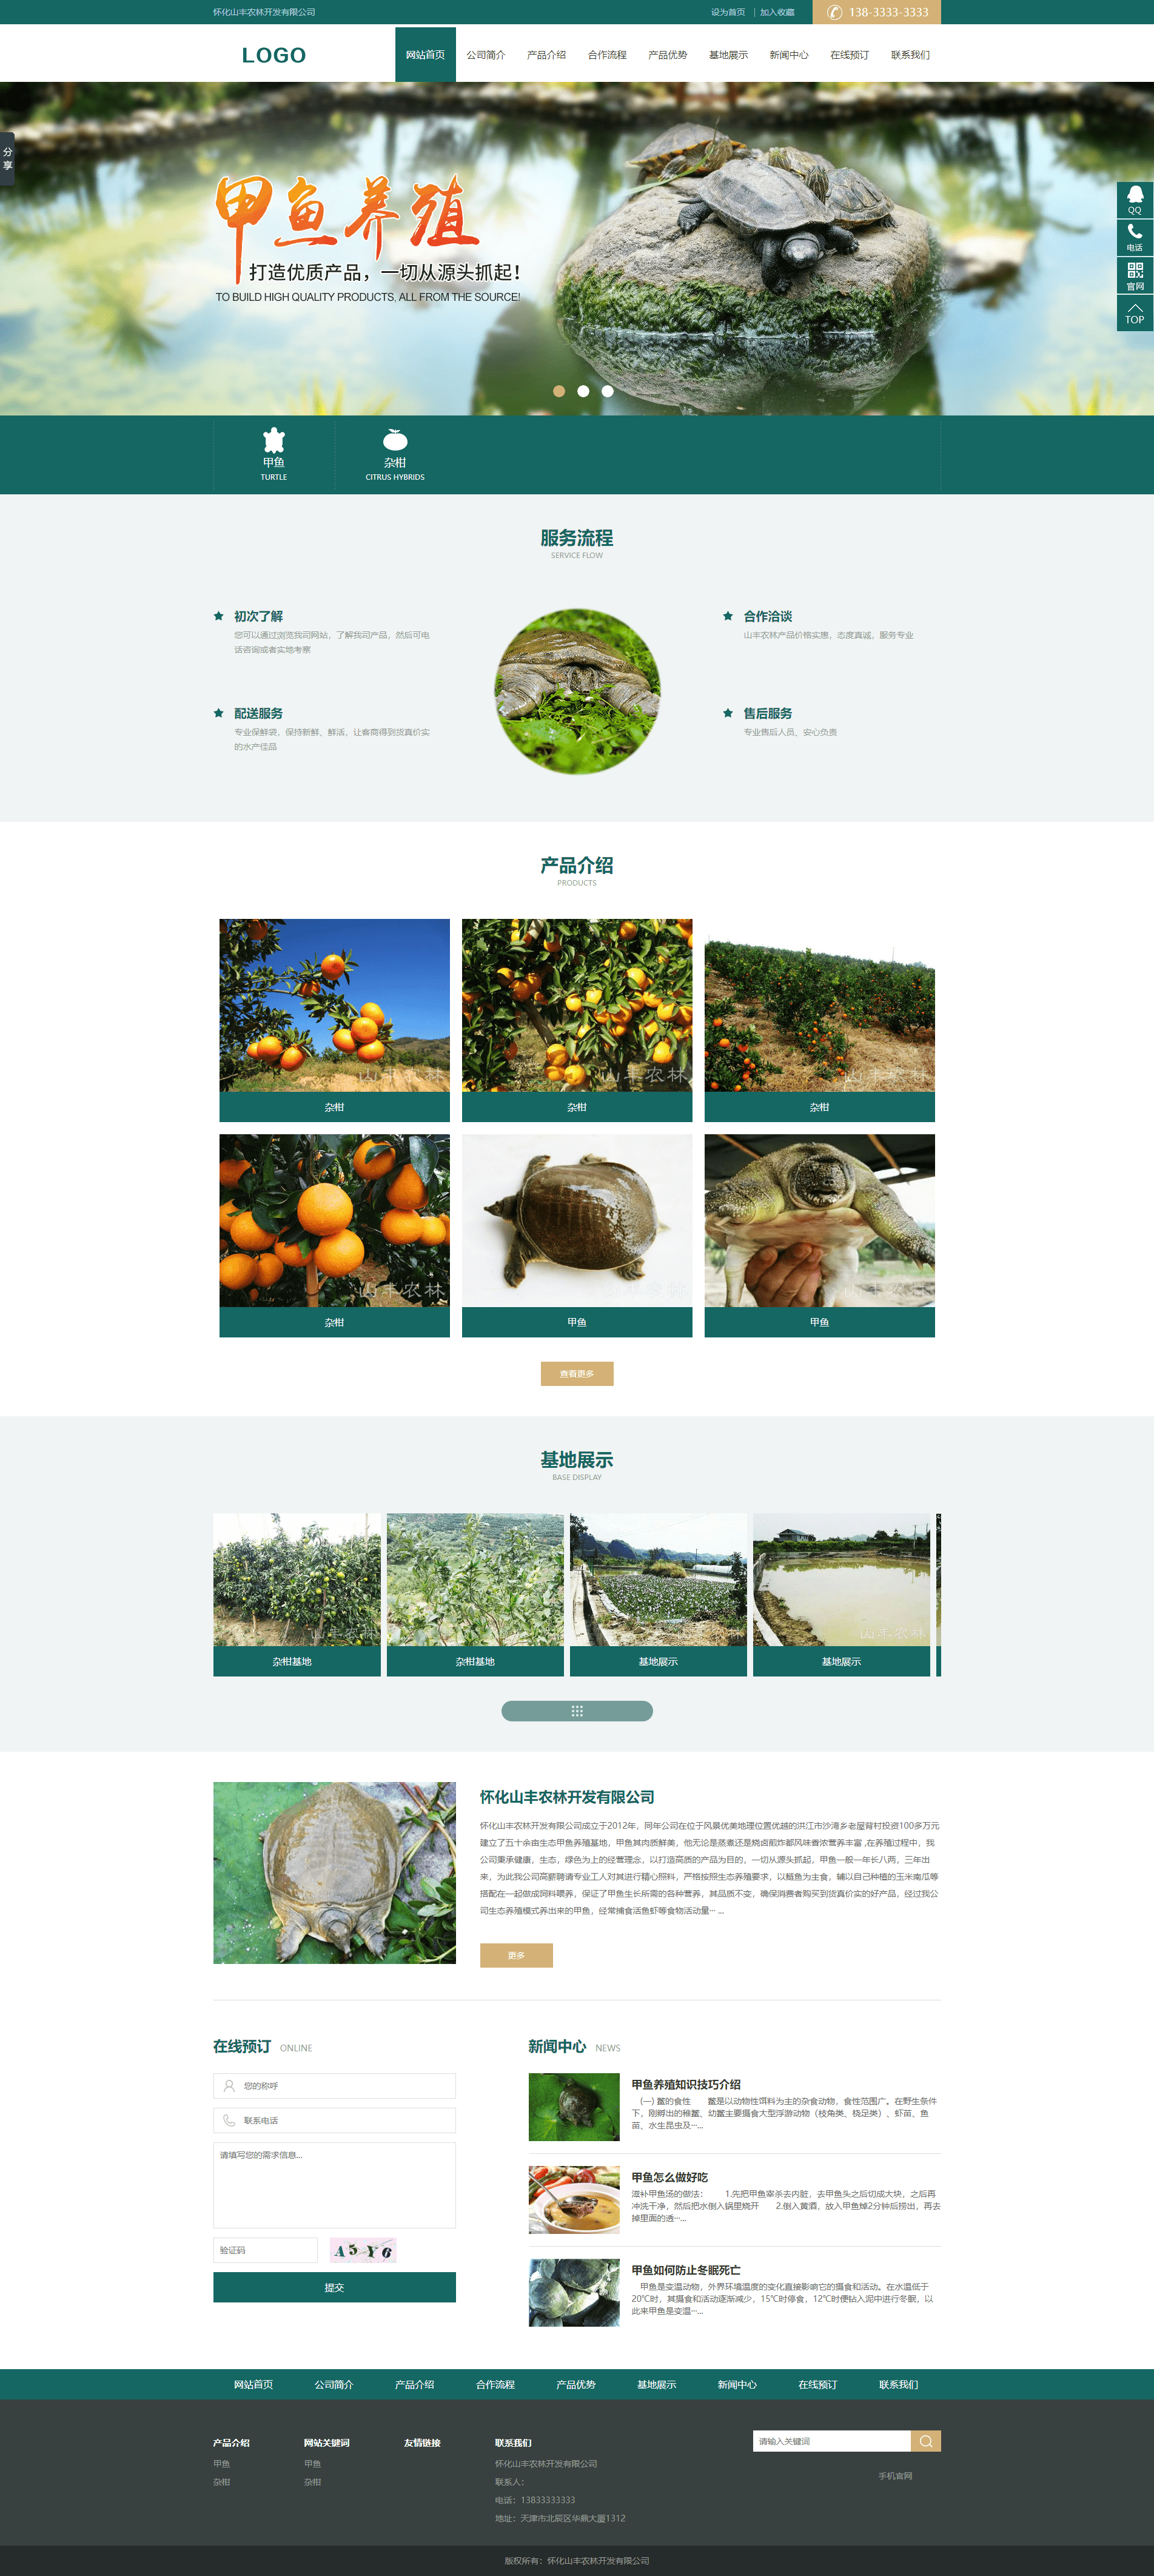 Pbootcms农业甲鱼牲畜家禽养殖网站模板